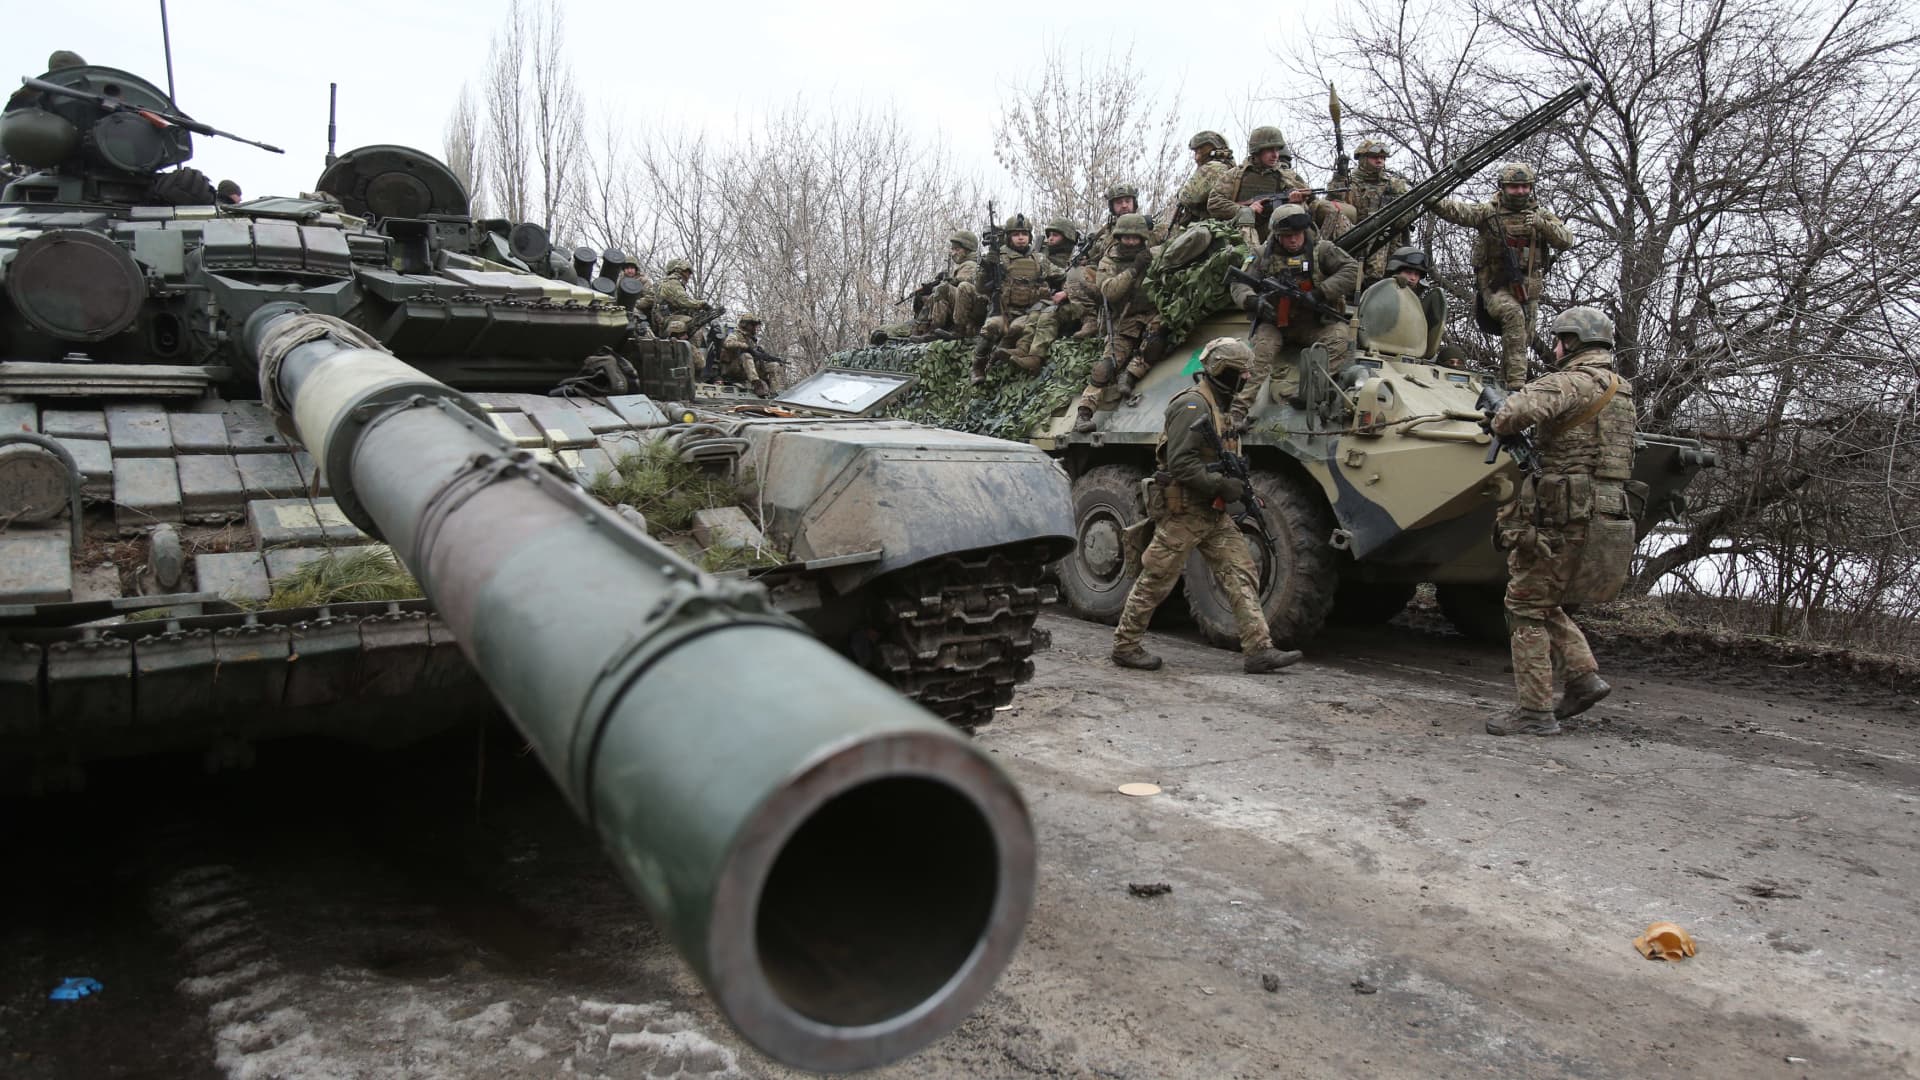 Ukrainian servicemen get ready to repel an attack in Ukraine's Lugansk region on Feb. 24, 2022.